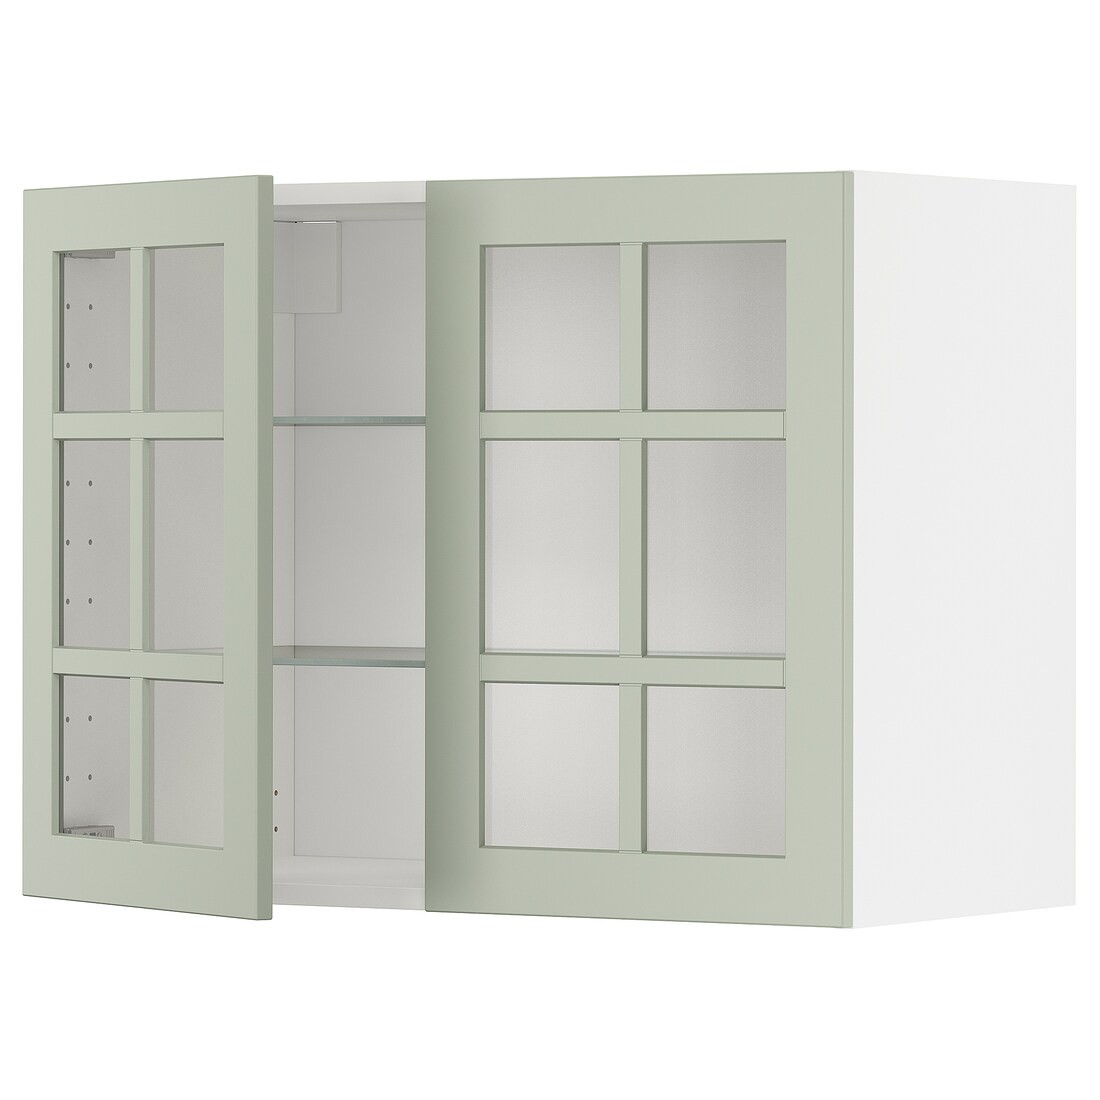 METOD МЕТОД Навесной шкаф, белый / Stensund светло-зеленый, 80x60 см